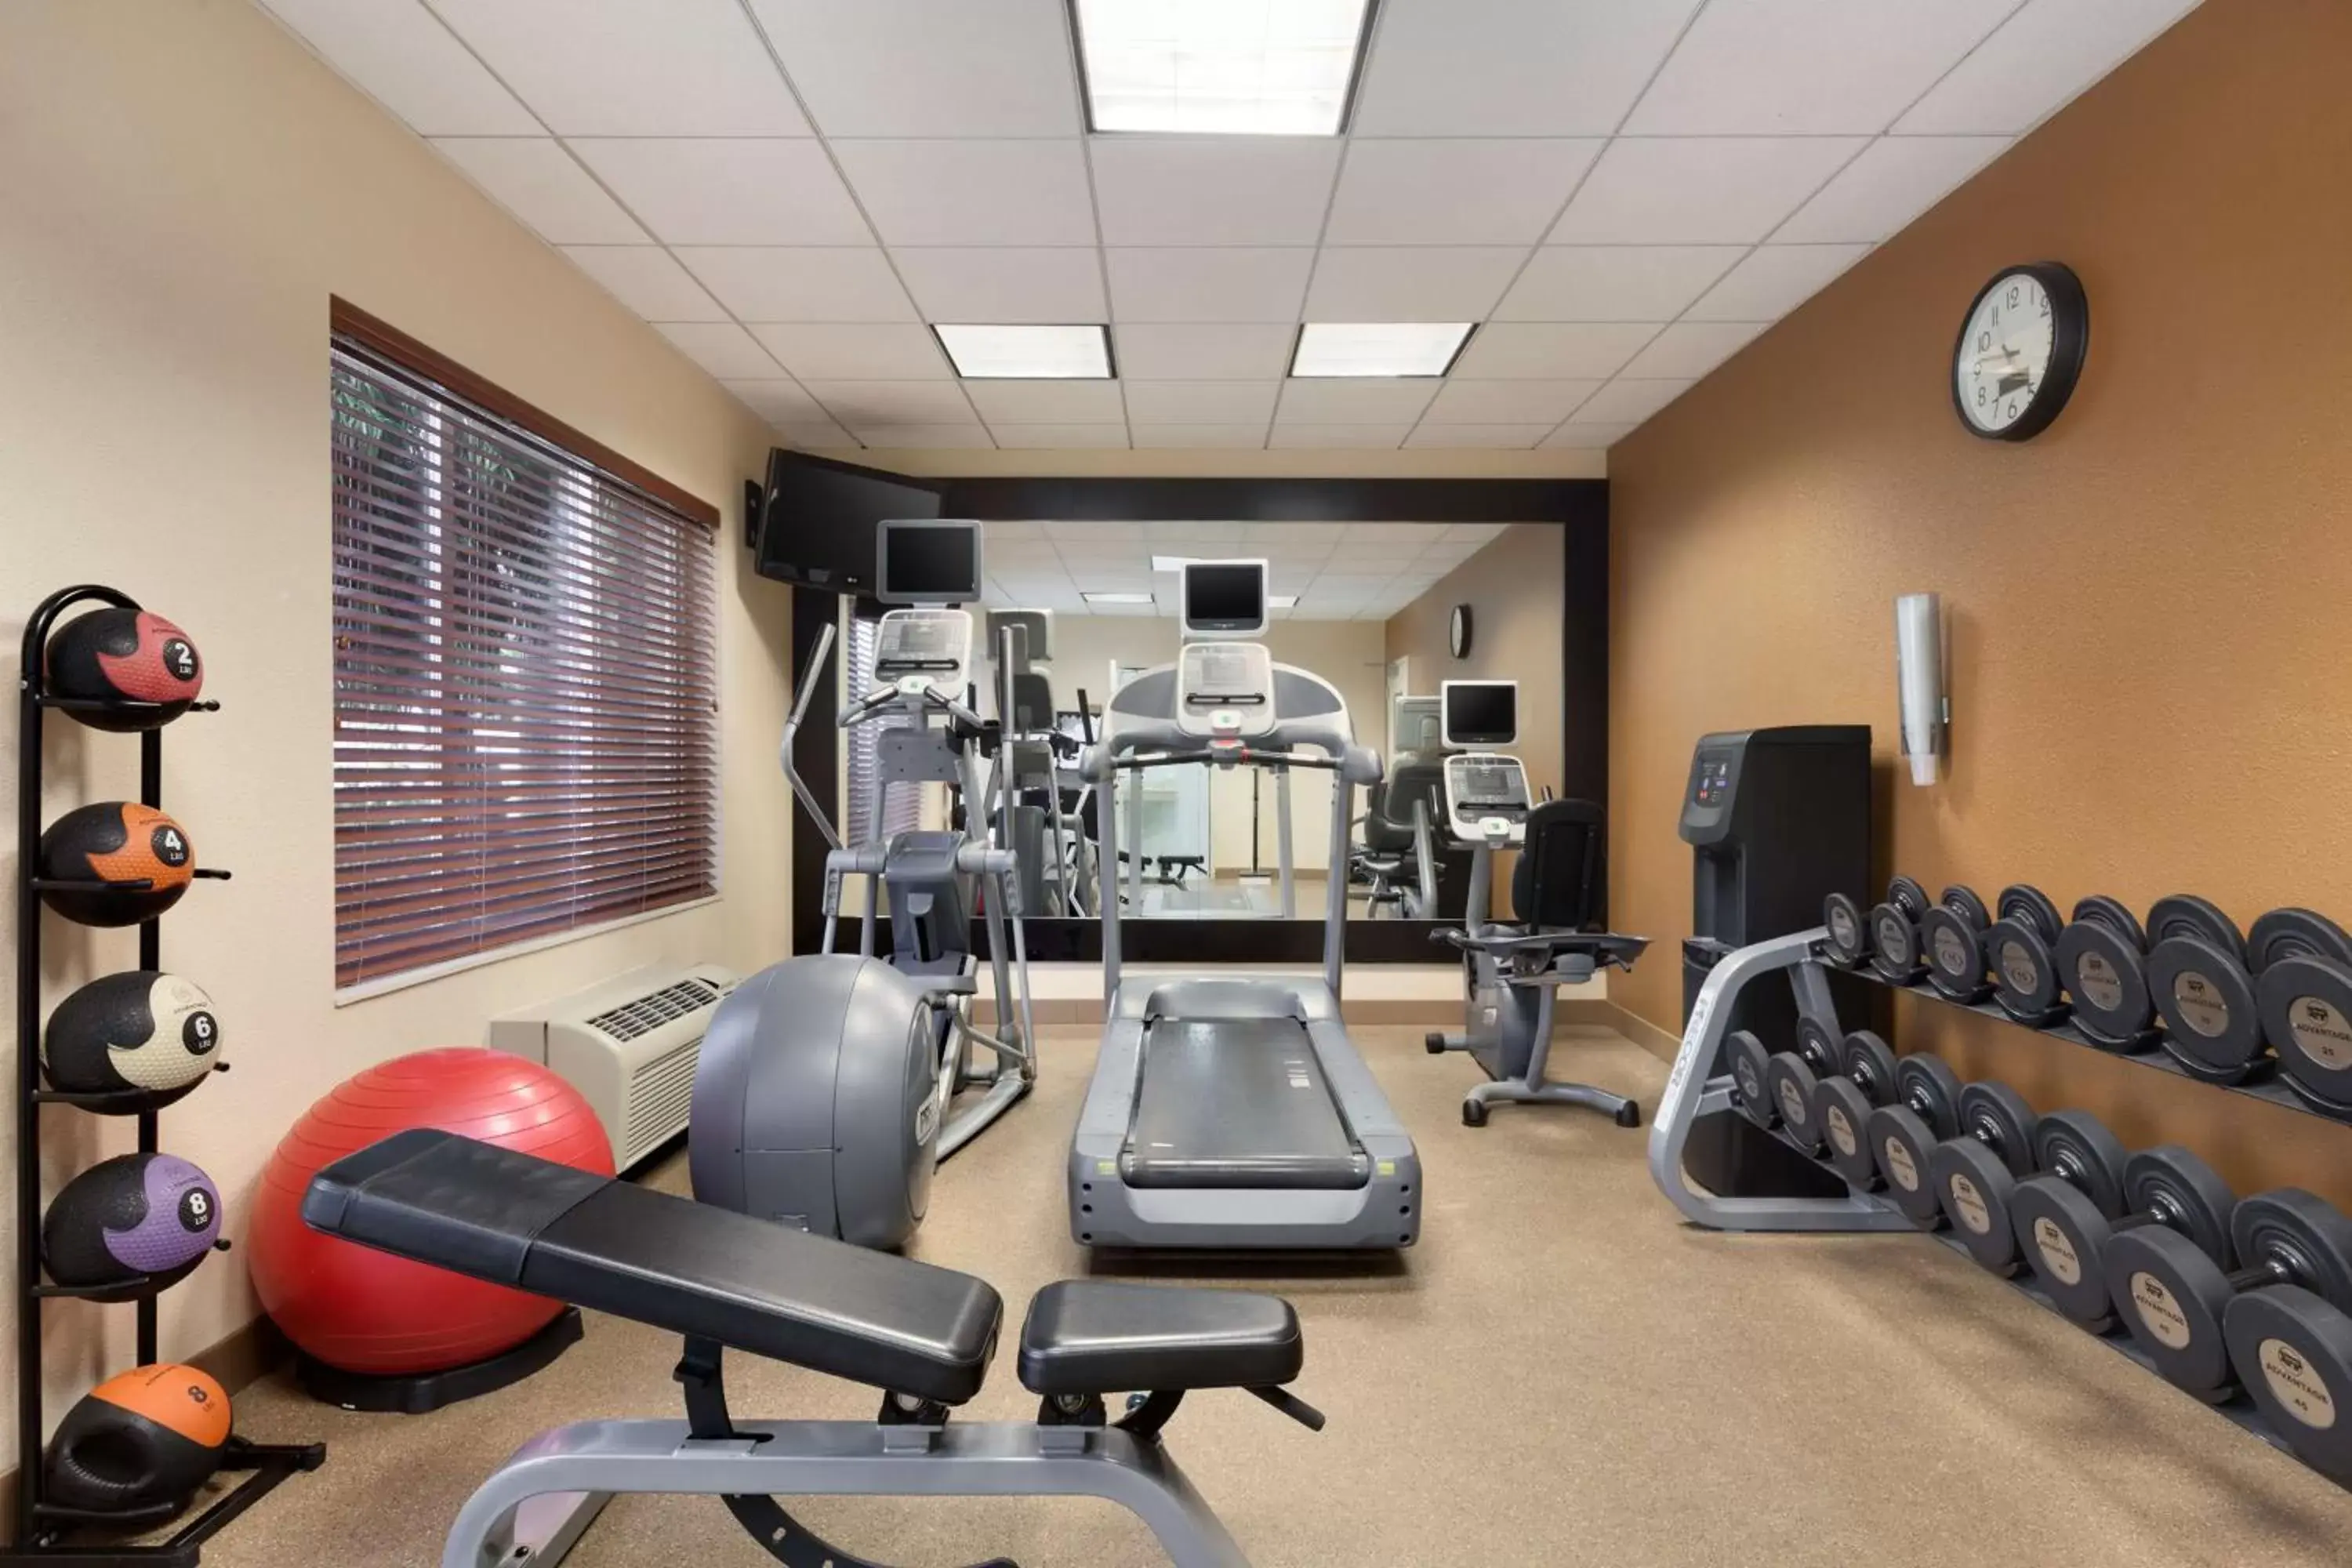 Fitness centre/facilities, Fitness Center/Facilities in Hilton Garden Inn San Jose/Milpitas